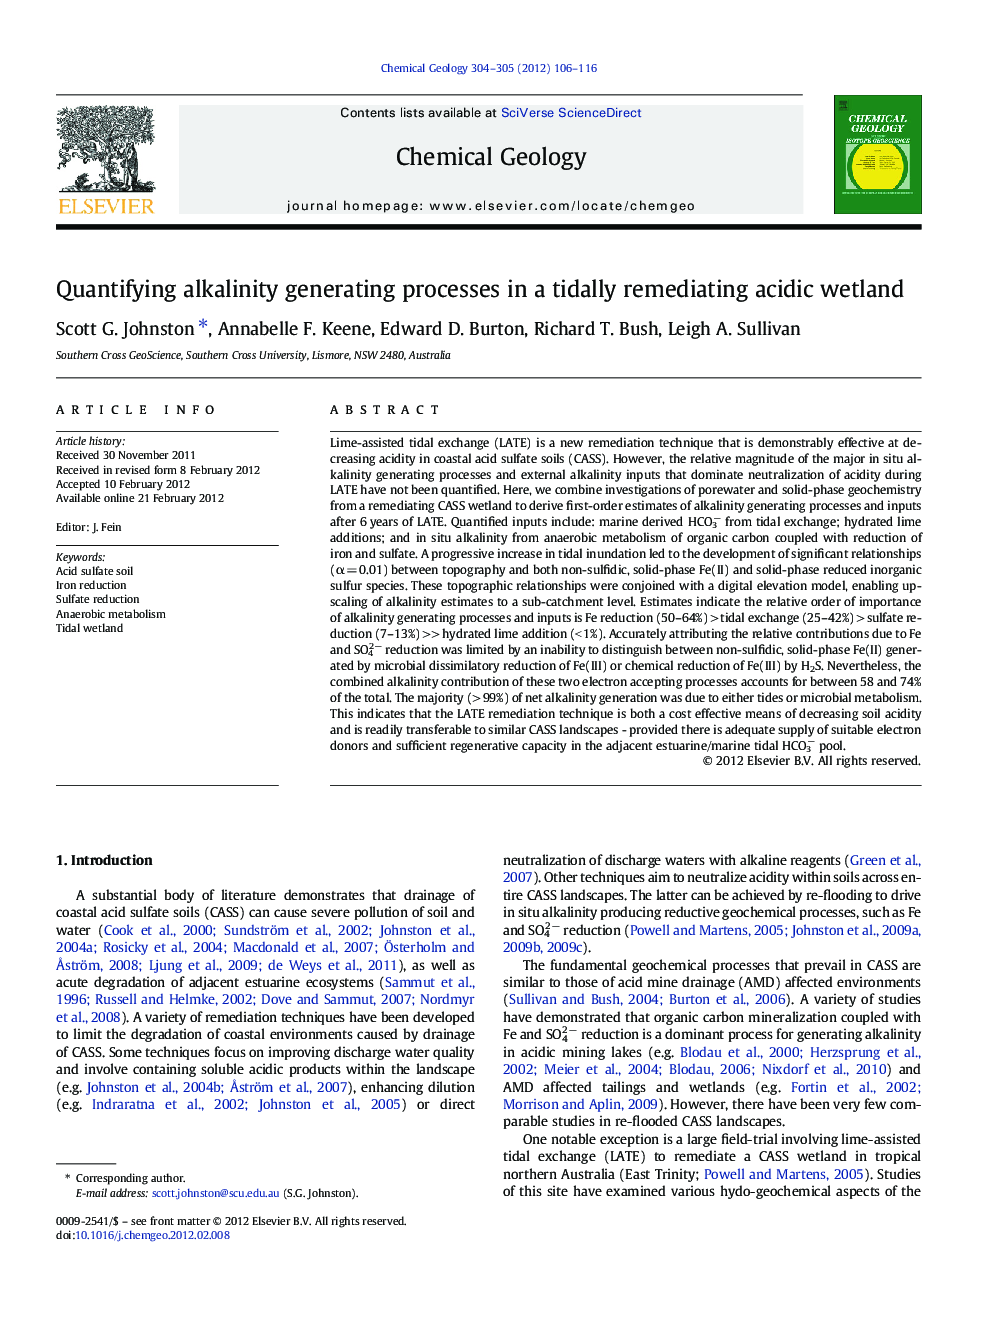 Quantifying alkalinity generating processes in a tidally remediating acidic wetland